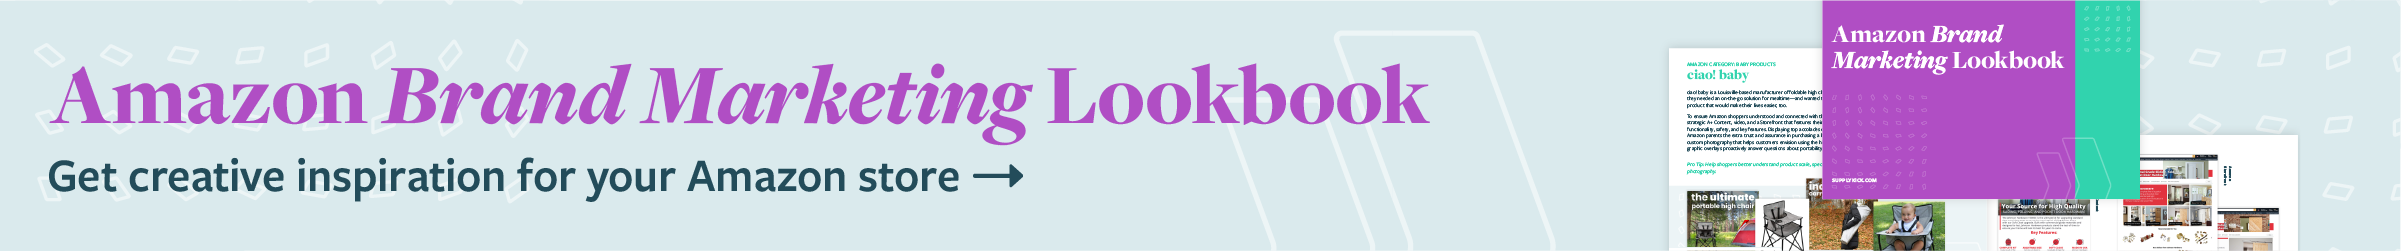 Amazon Brand Marketing Lookbook: Creative inspiration for your Amazon store